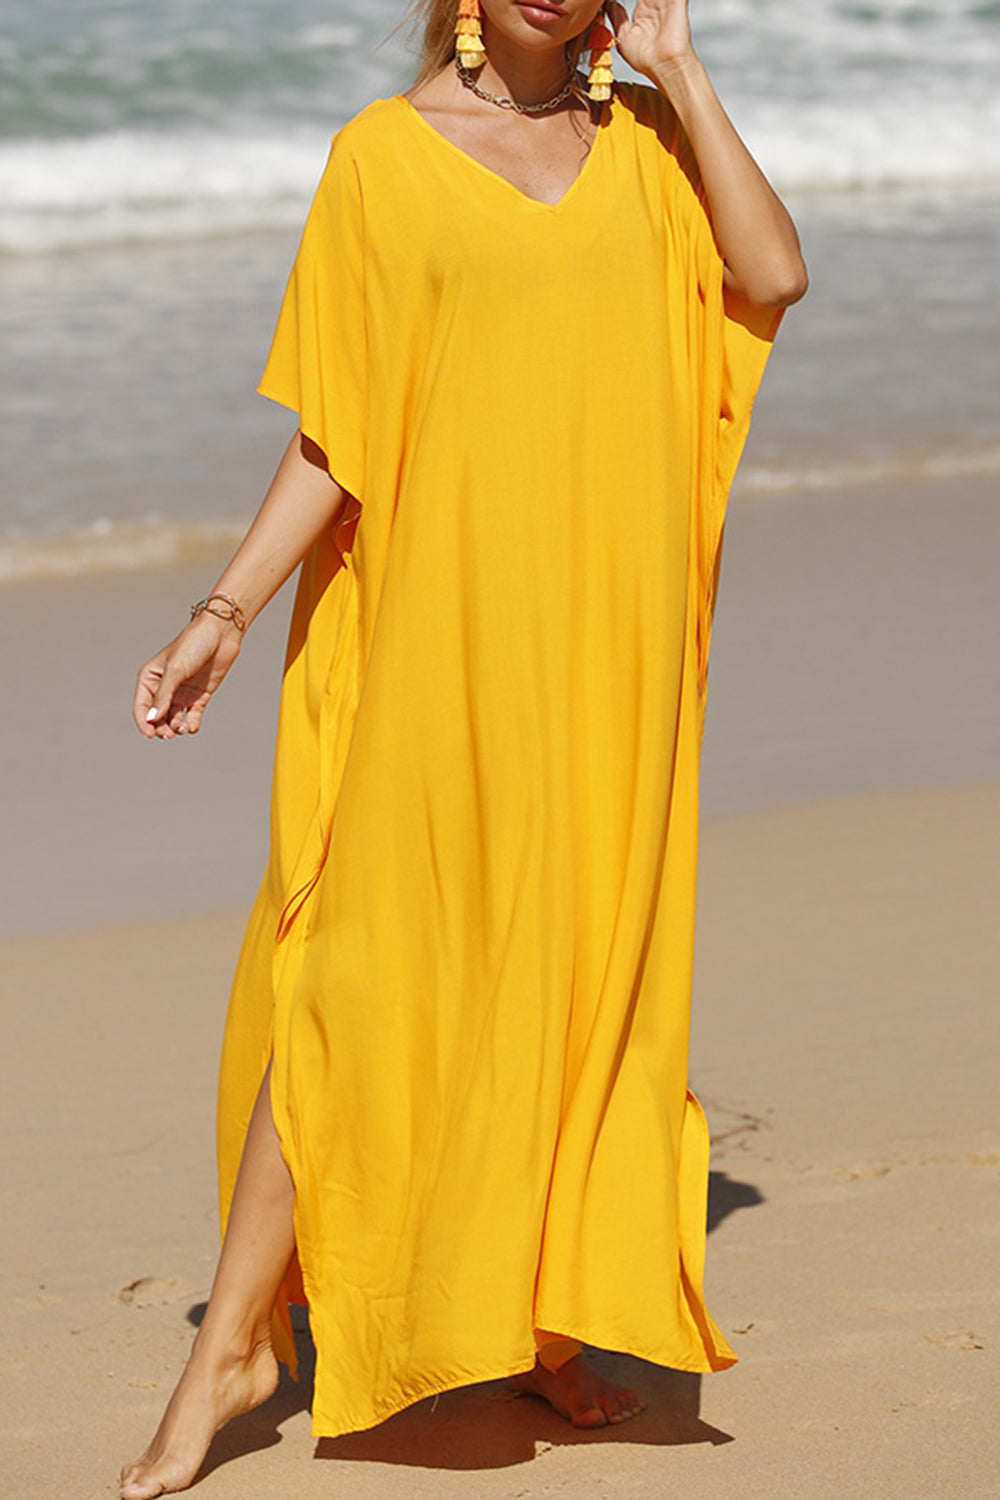 Slit V-Neck Half Sleeve Cover-Up Beach Maxi Dress